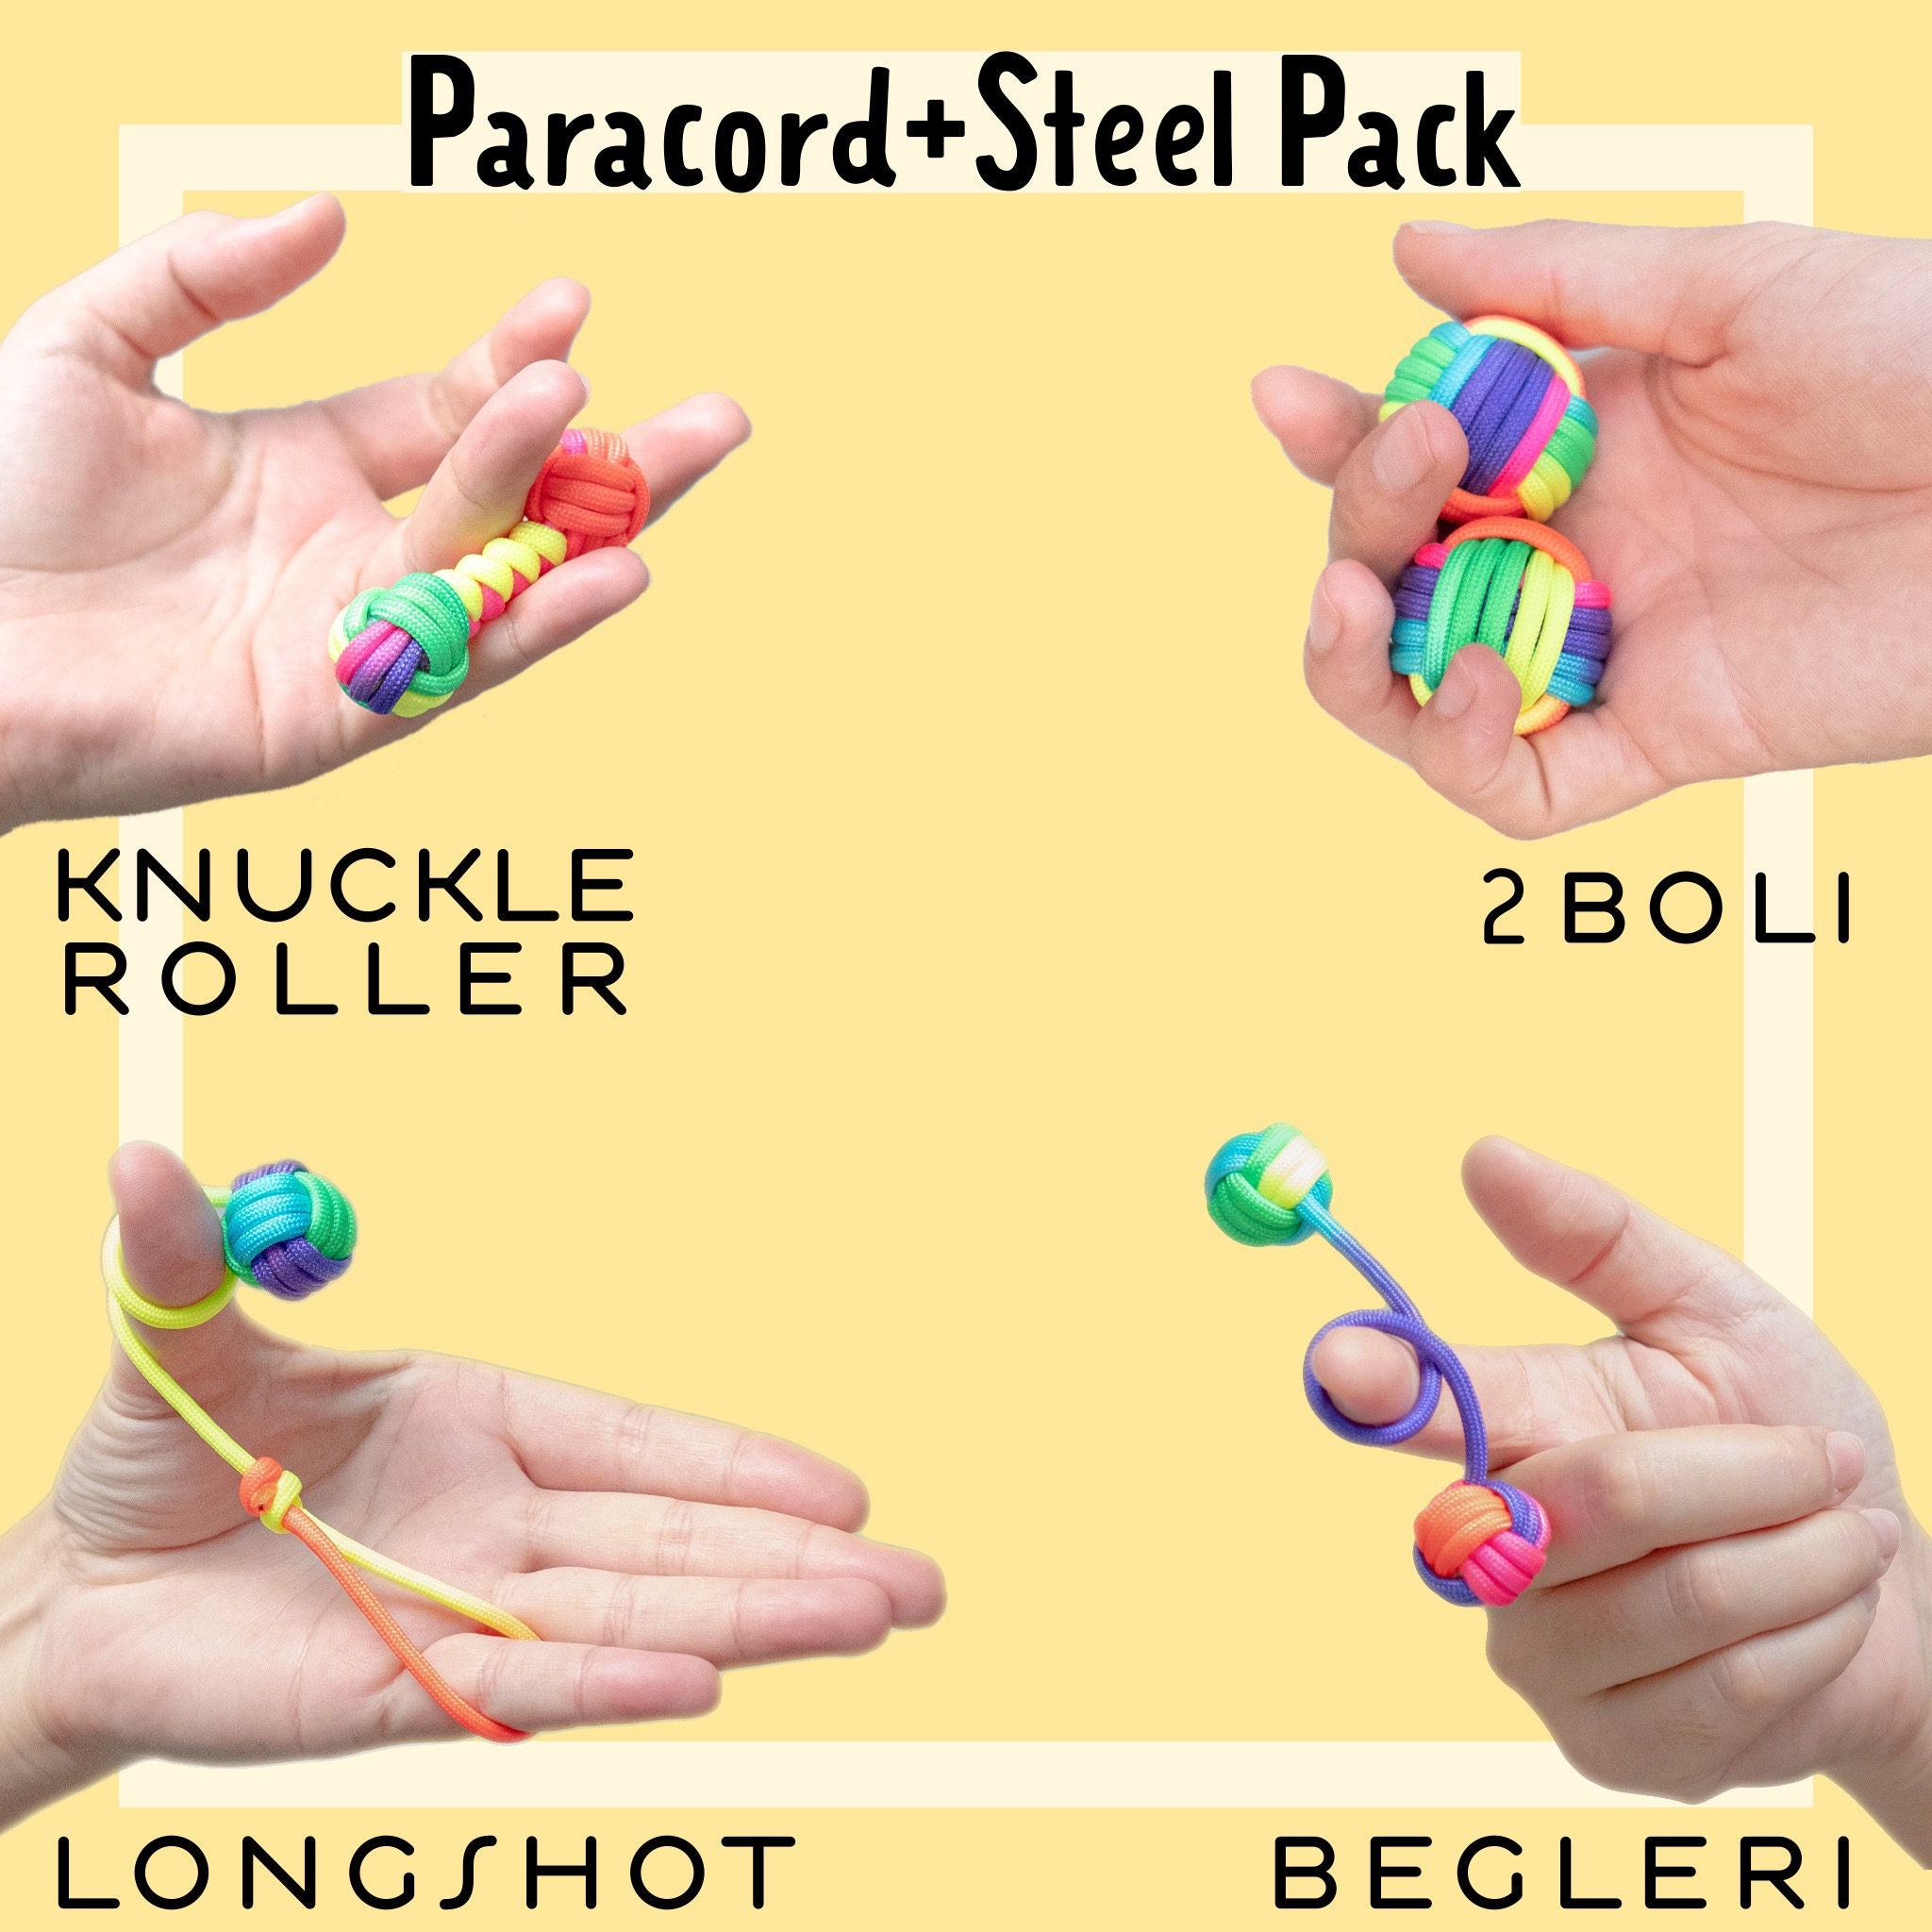 Paracord and Steel Finger Toy Pack Begleri Boli Knuckleroller